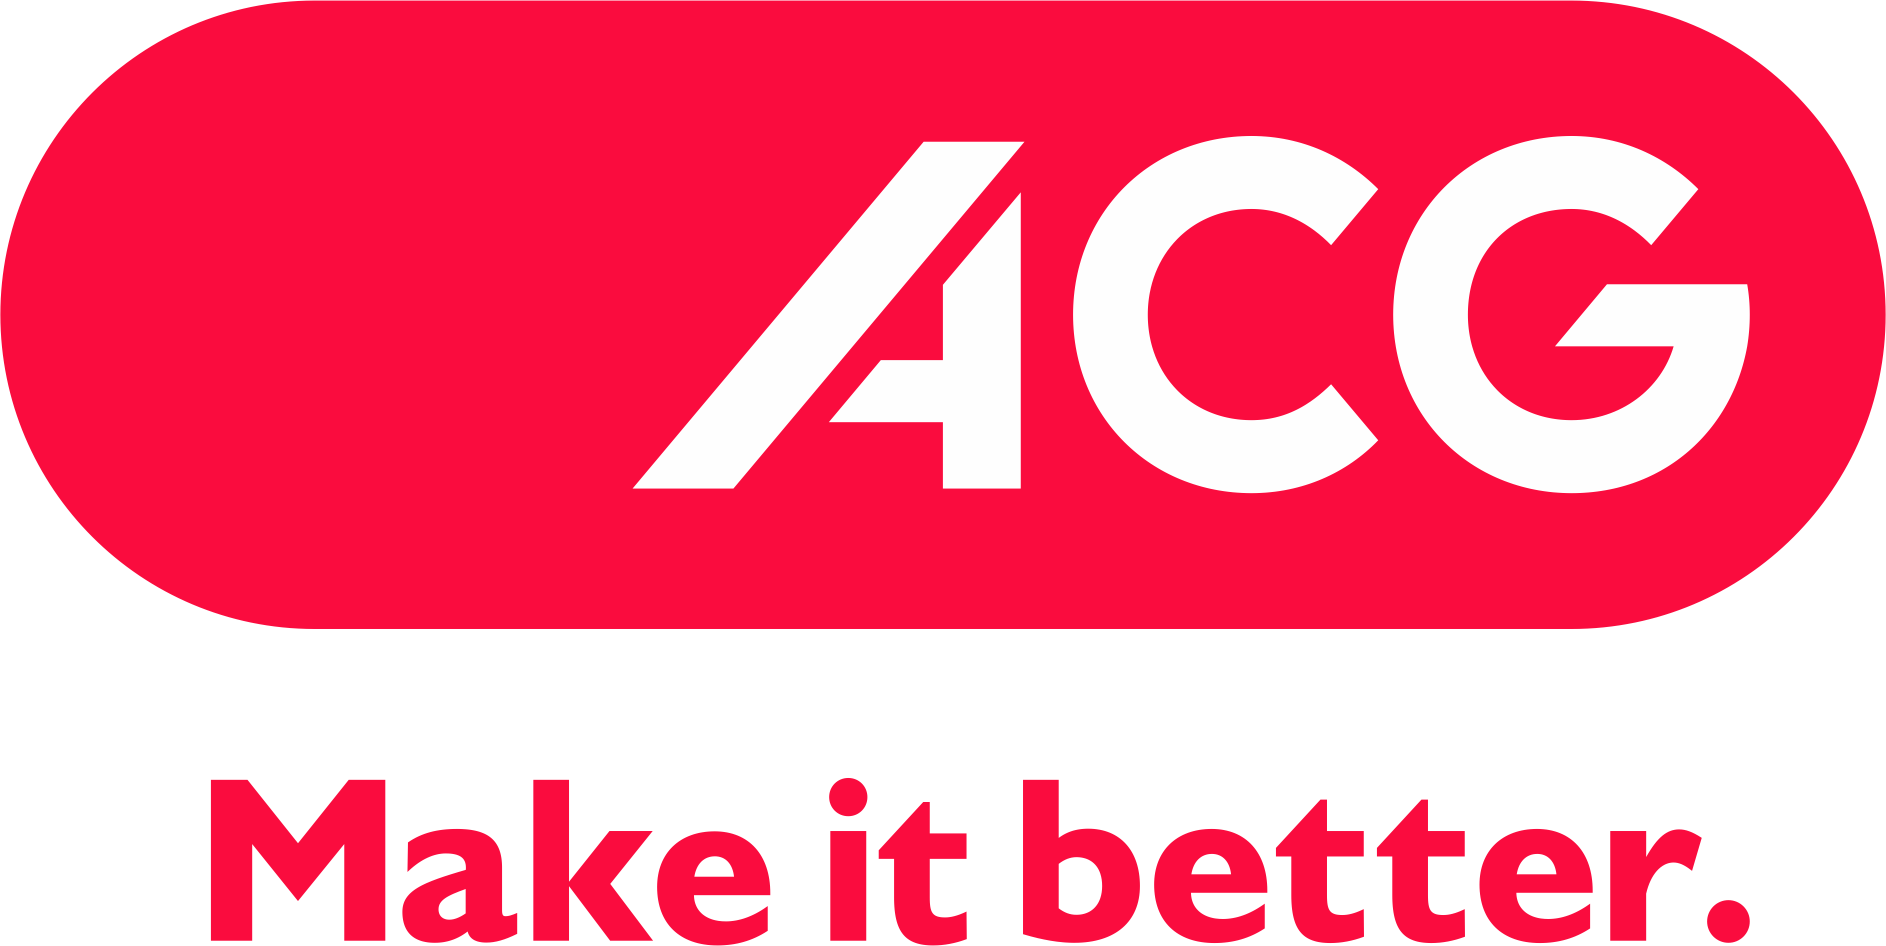 ACG Associated Capsules Pvt. Ltd